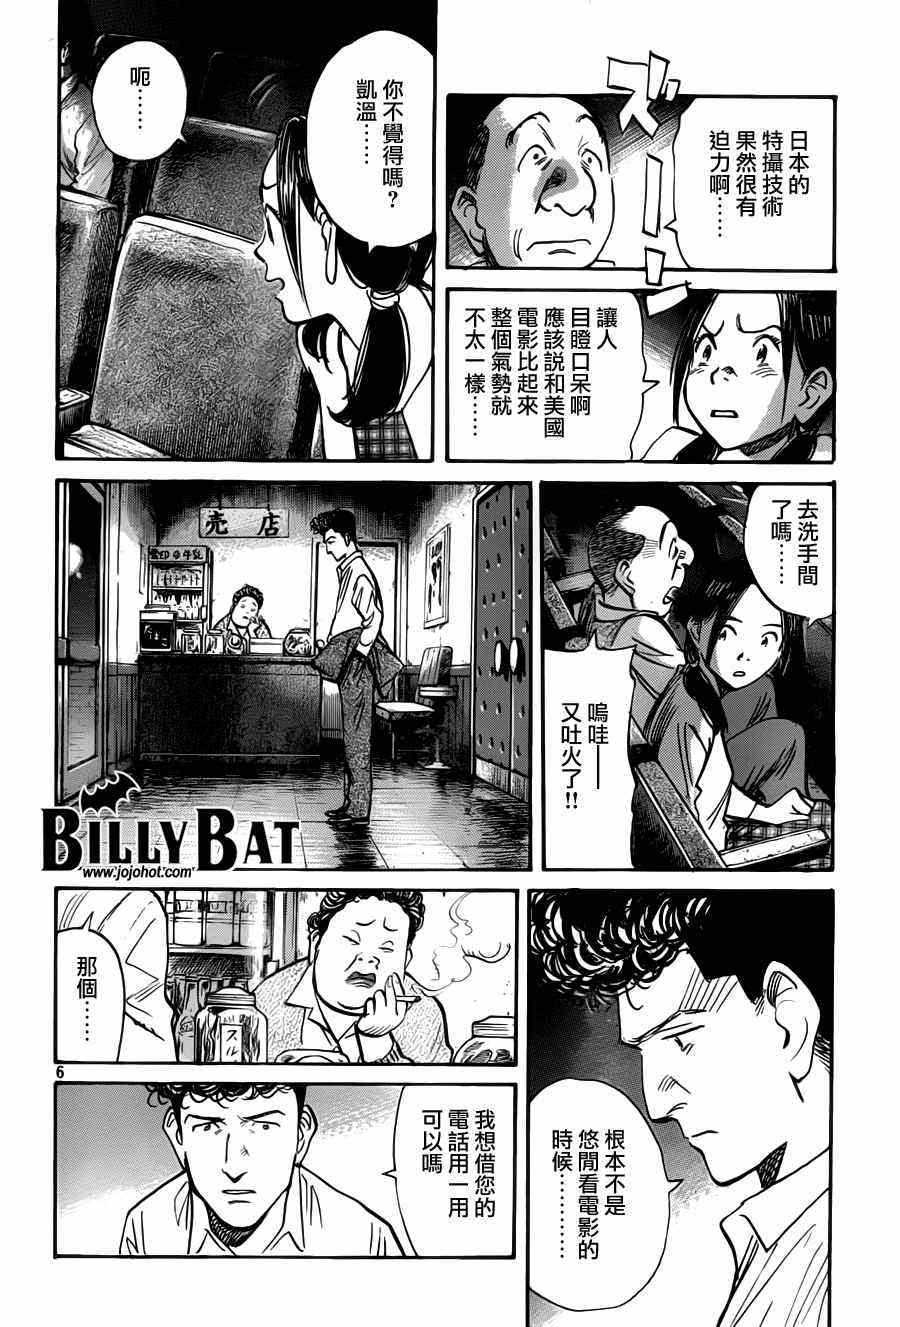 Billy_Bat - 第74話 - 1